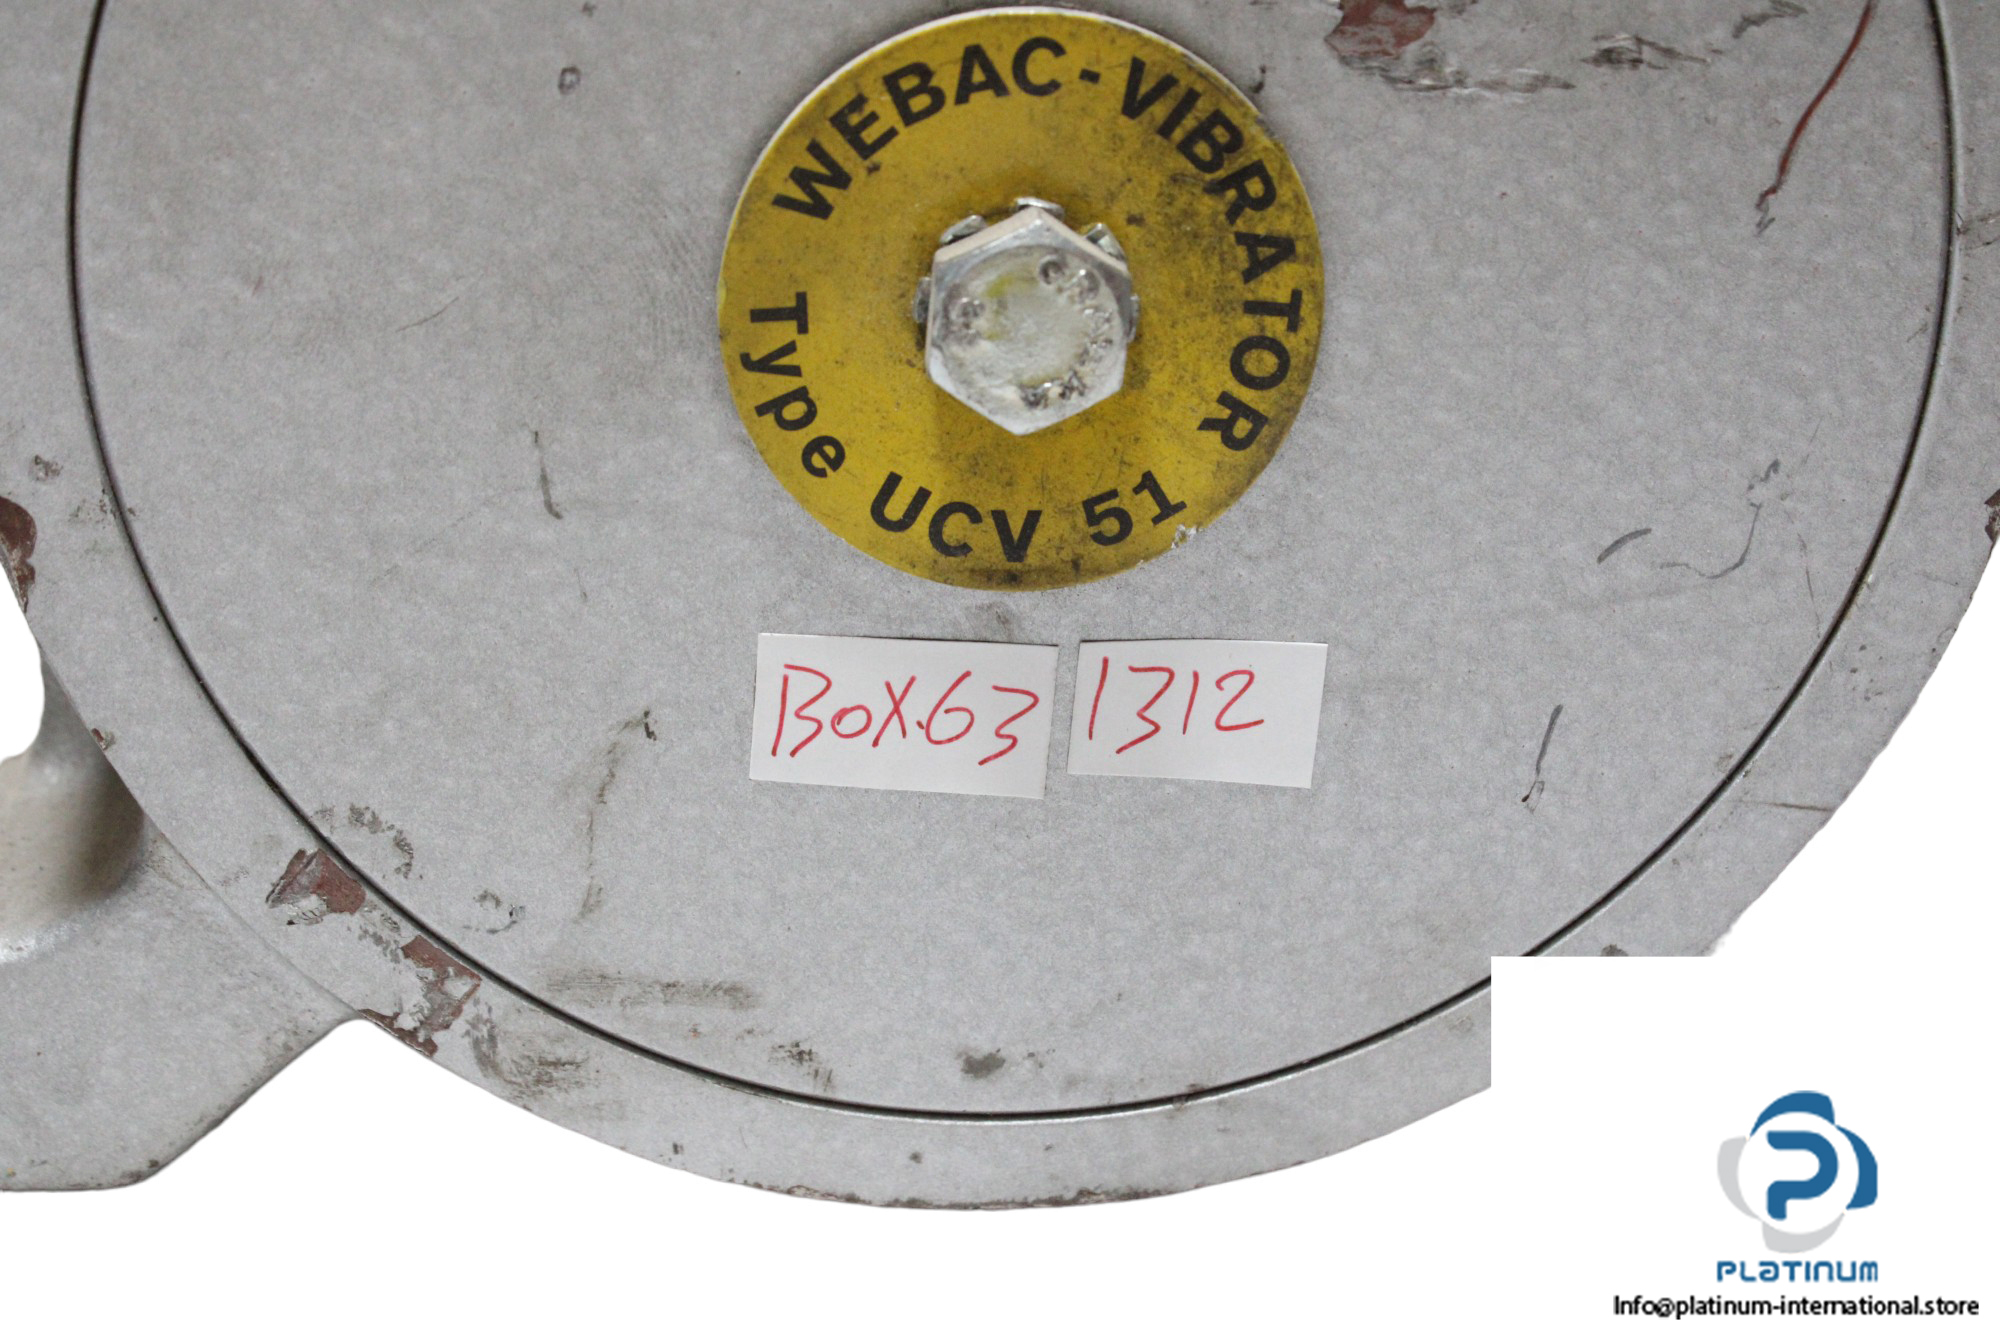 webac-UCV51-pneumatic-ball-vibrator-used-2